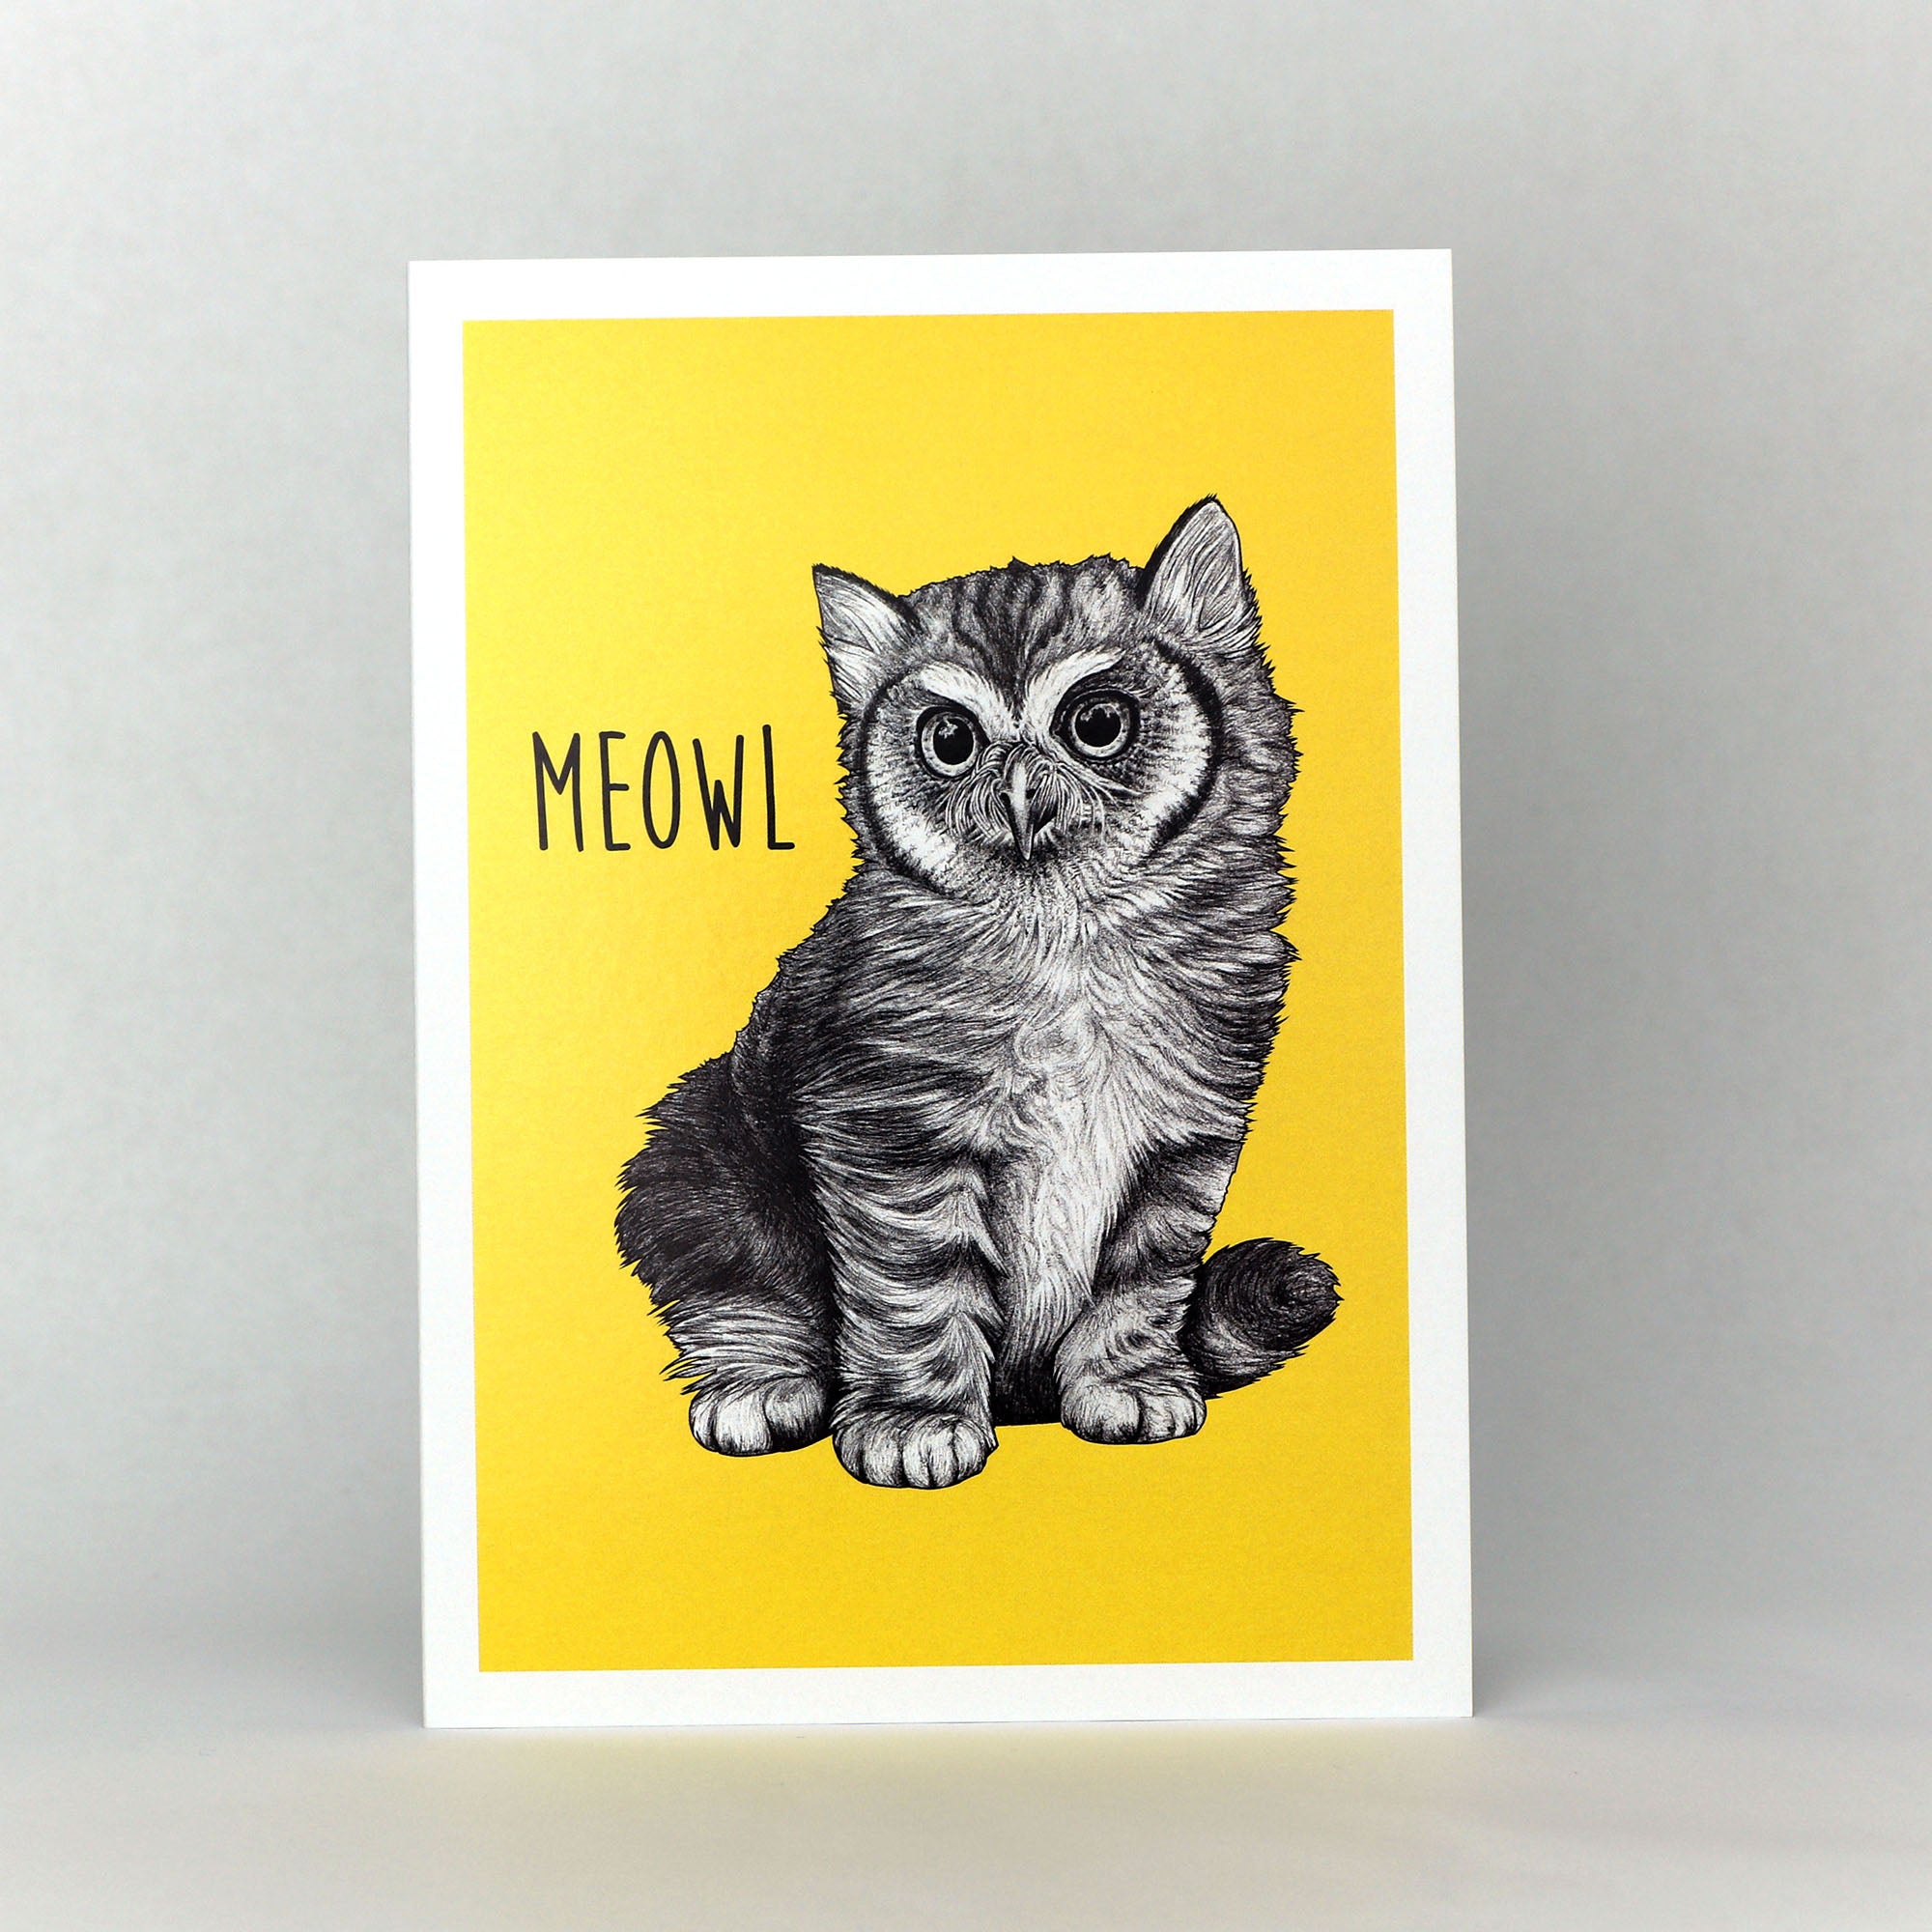 Meowl | Cat + Owl Hybrid Animal | 5x7" Greeting Card